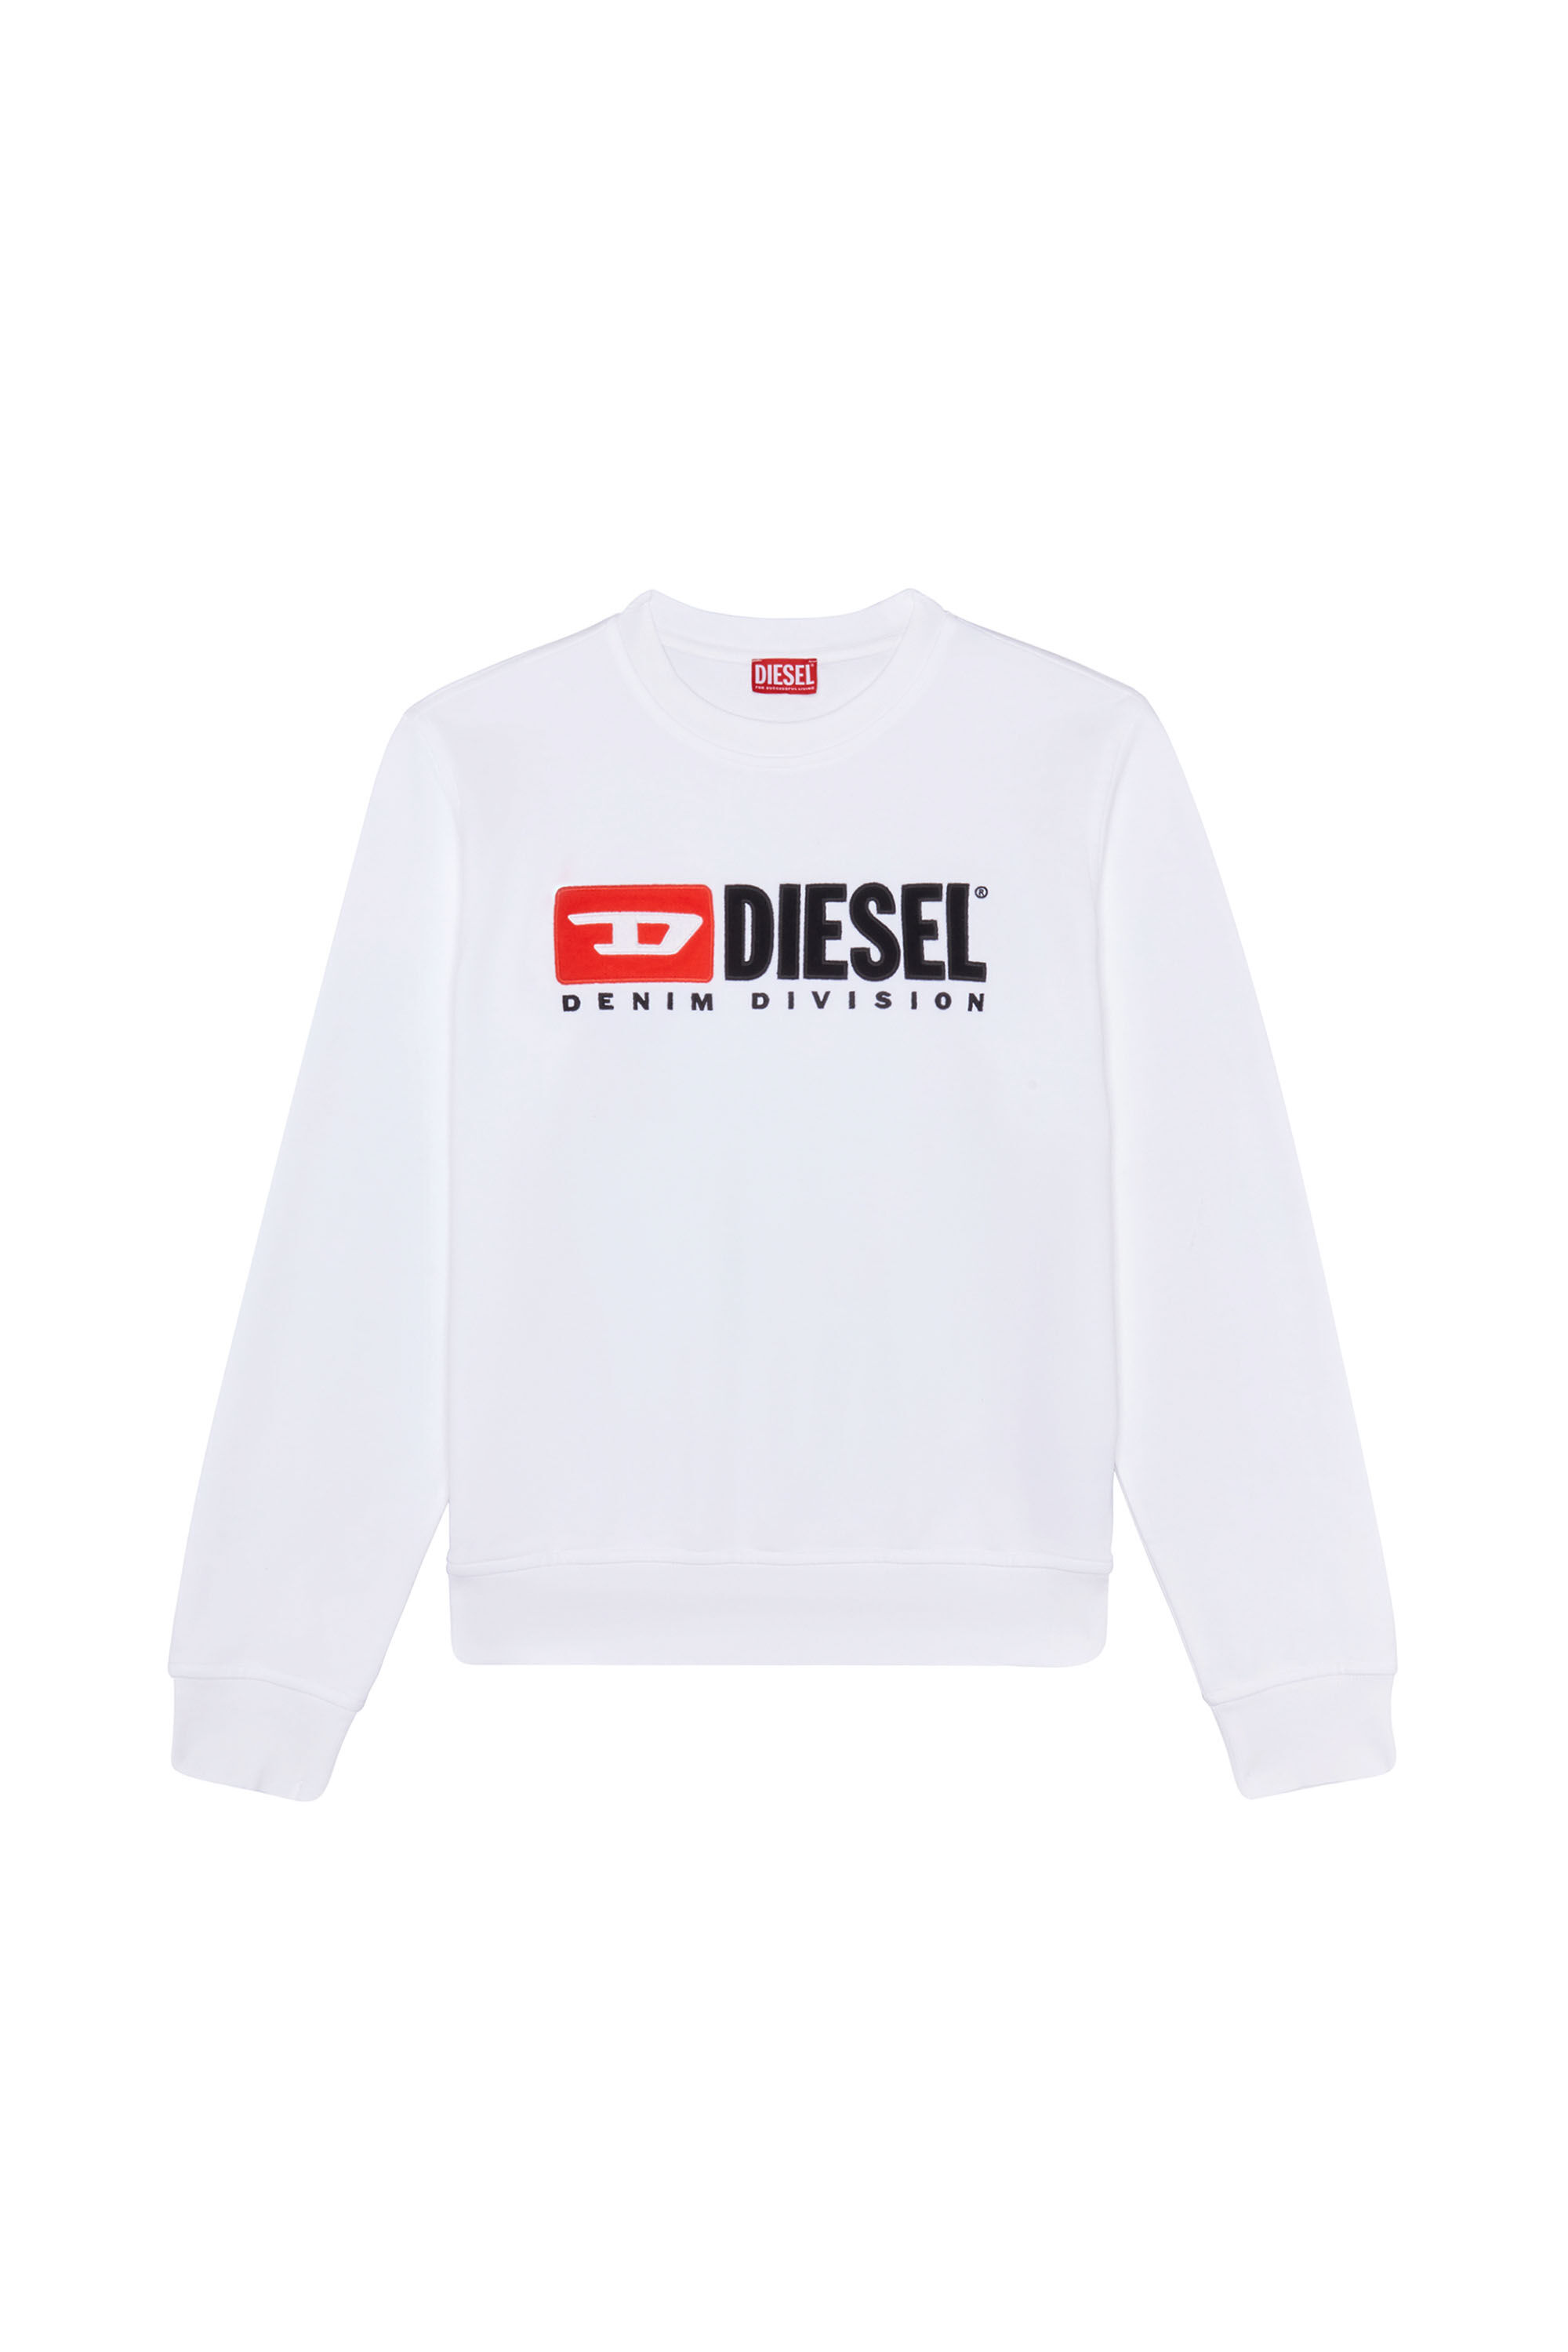 Diesel - S-GINN-DIV, White - Image 2